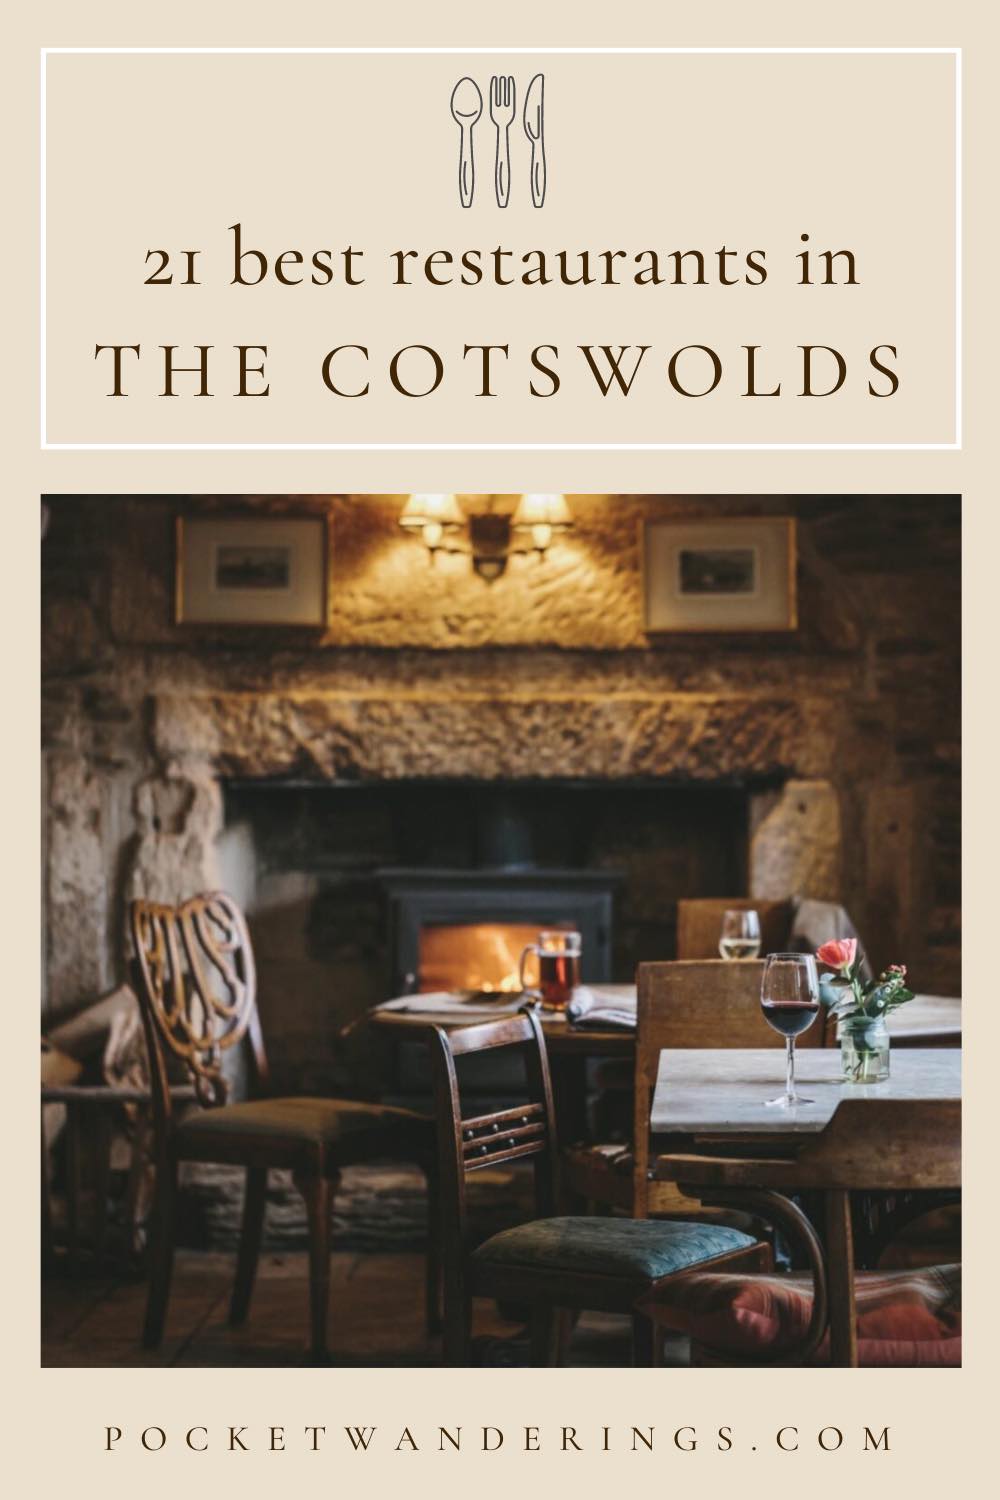 Best Cotswolds Restaurants